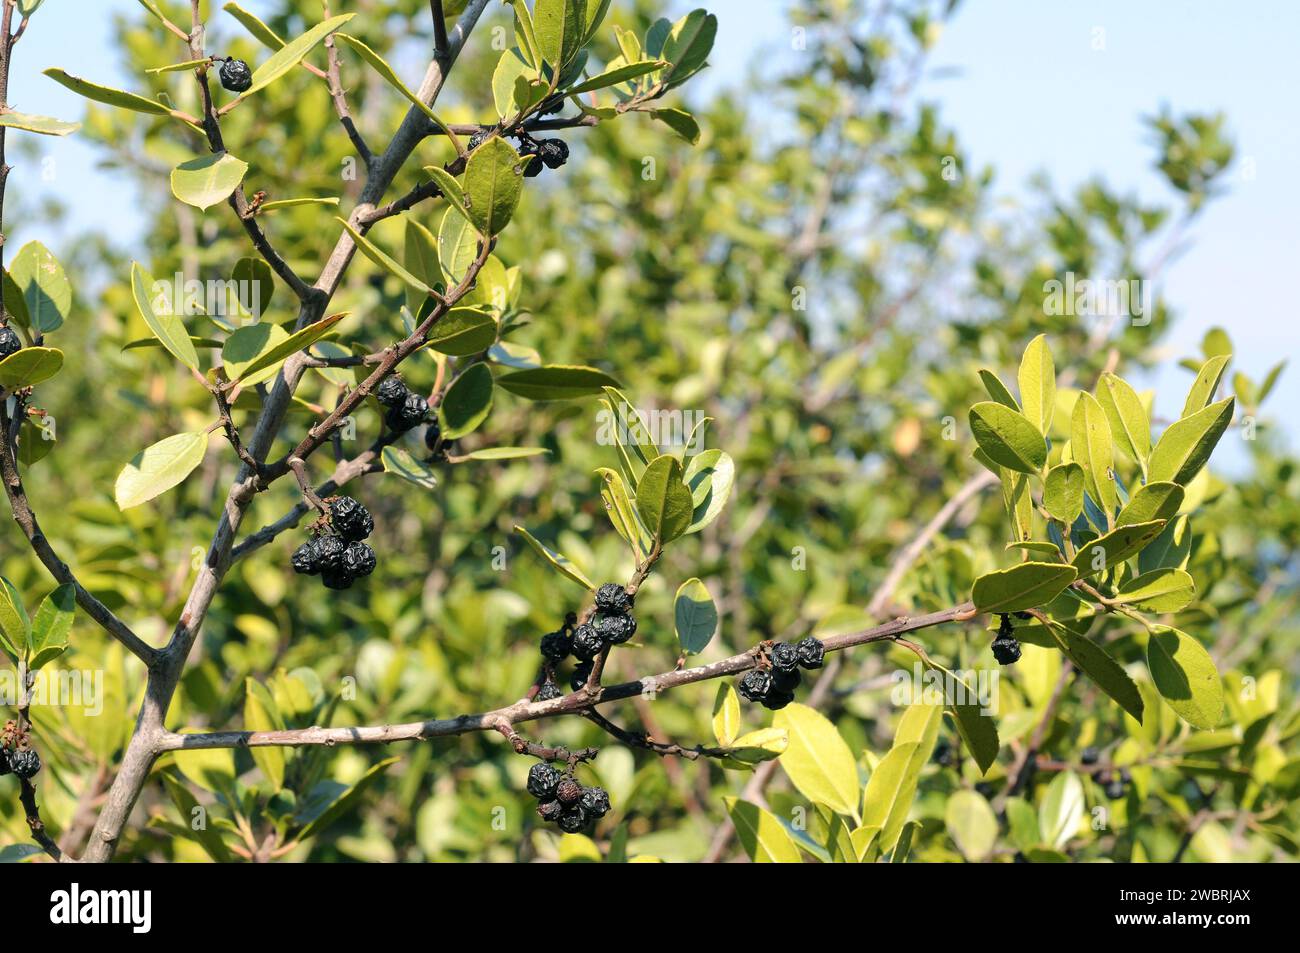 Mediterranean buckthorn (Rhamnus alaternus) is an evergreen shrub native to Mediterranean Basin. Mature fruits and leaves detail. This photo was taken Stock Photo